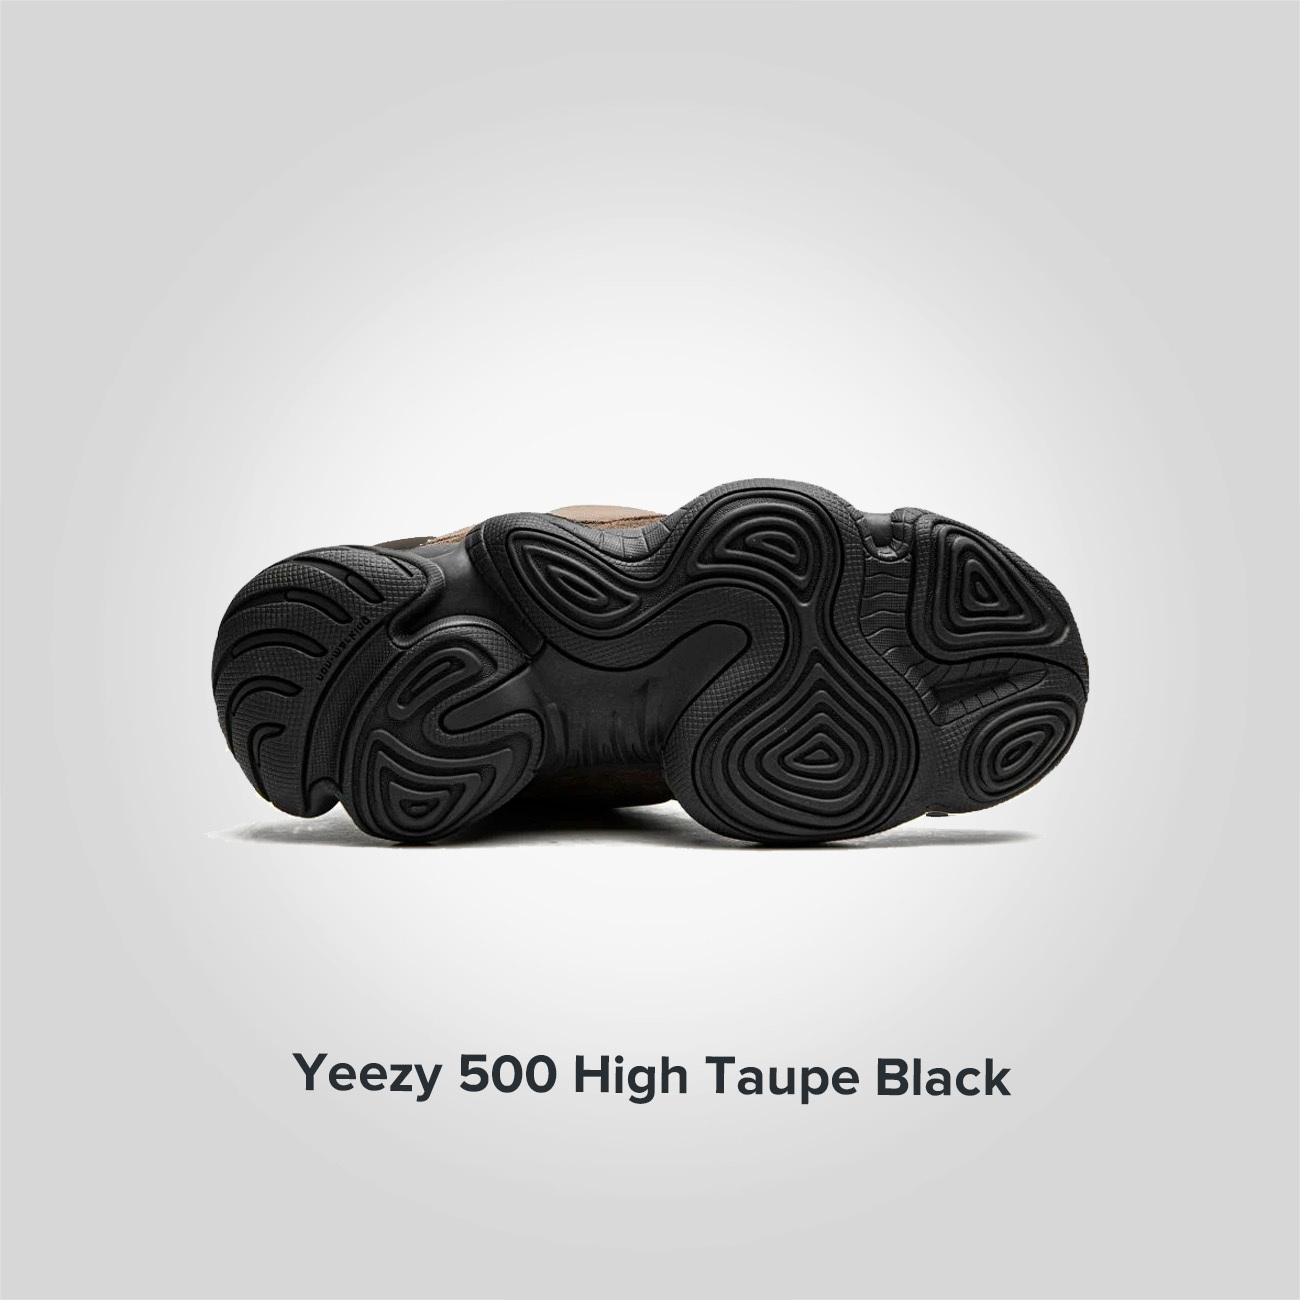 Yeezy 500 High Taupe Black